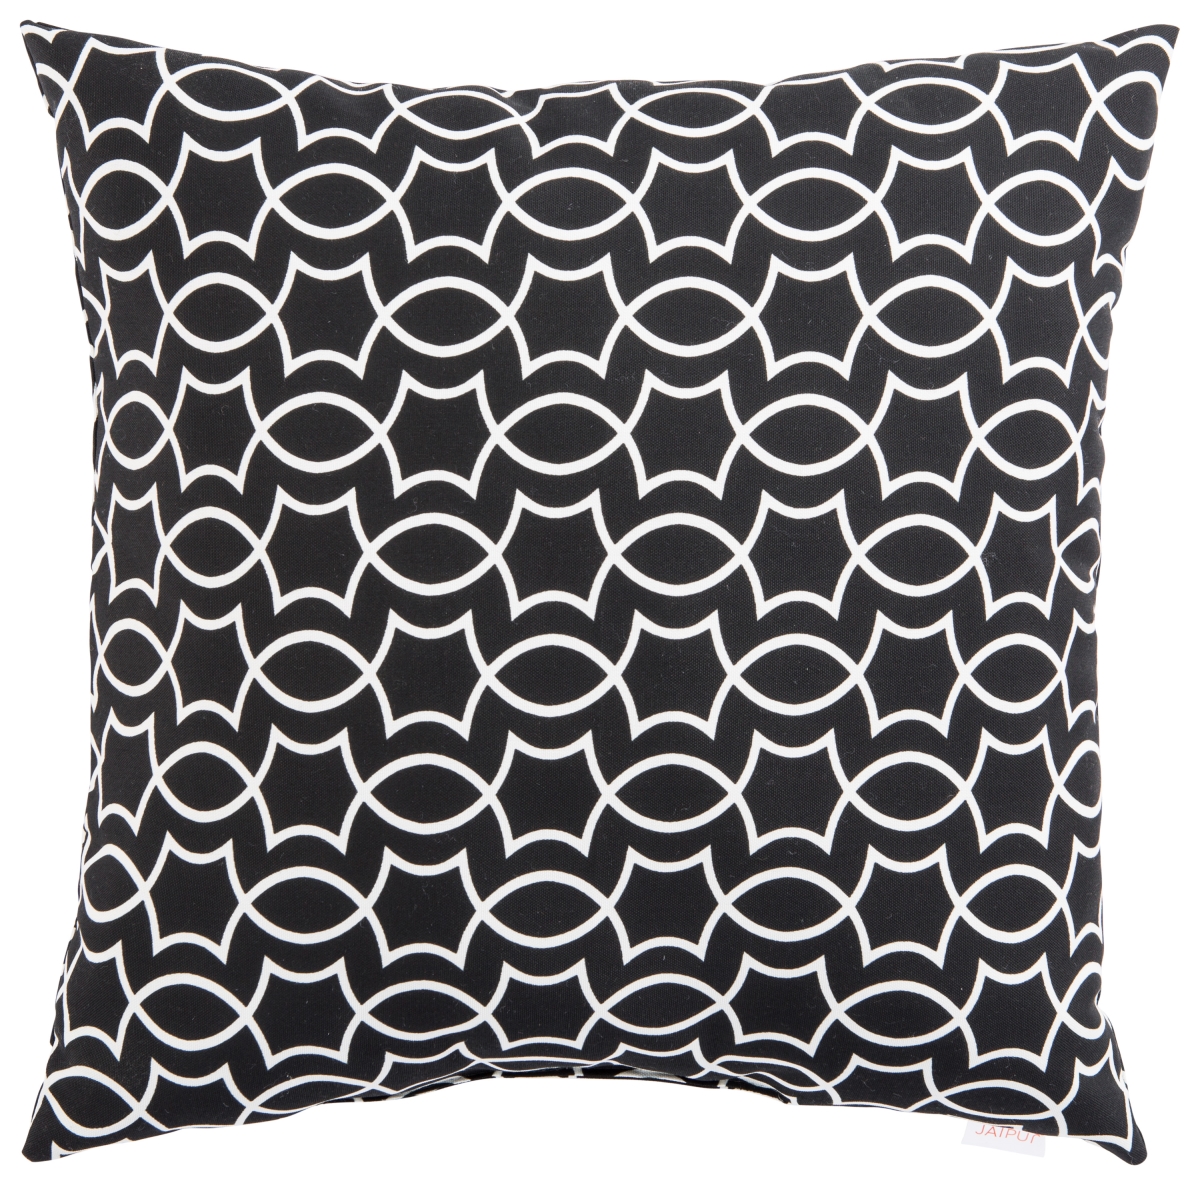 Plp100075 18 X 18 In. Veranda Titan Black & White Geometric Indoor & Outdoor Throw Pillow